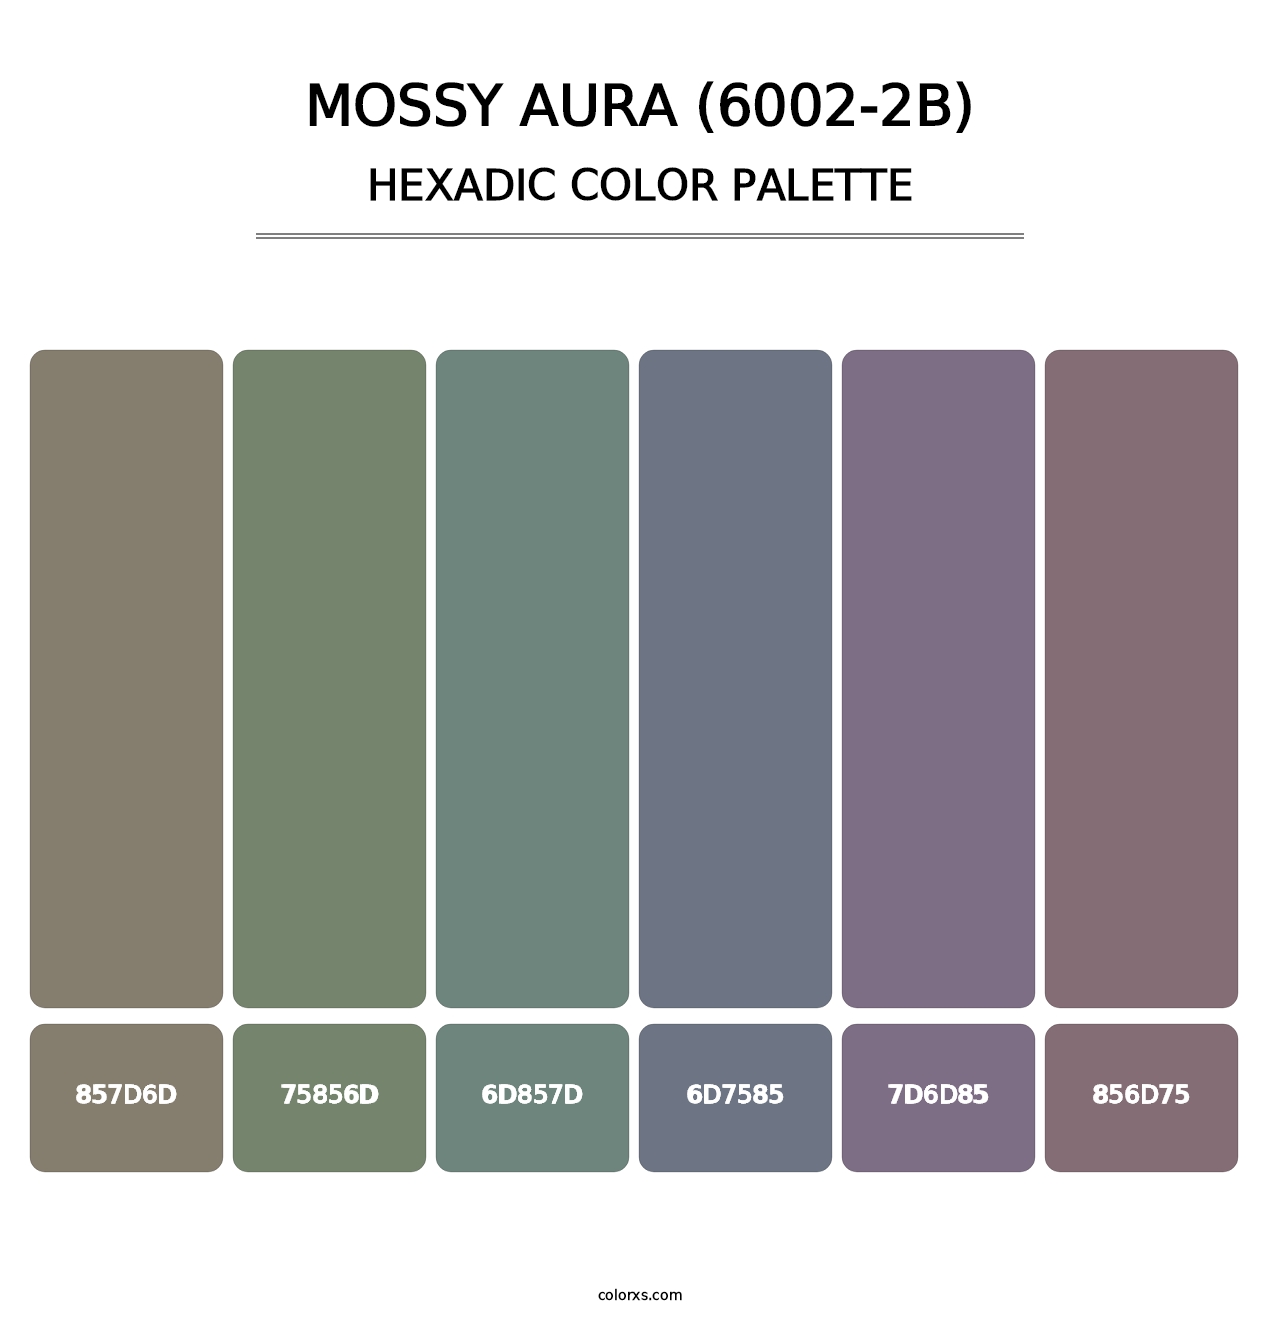 Mossy Aura (6002-2B) - Hexadic Color Palette